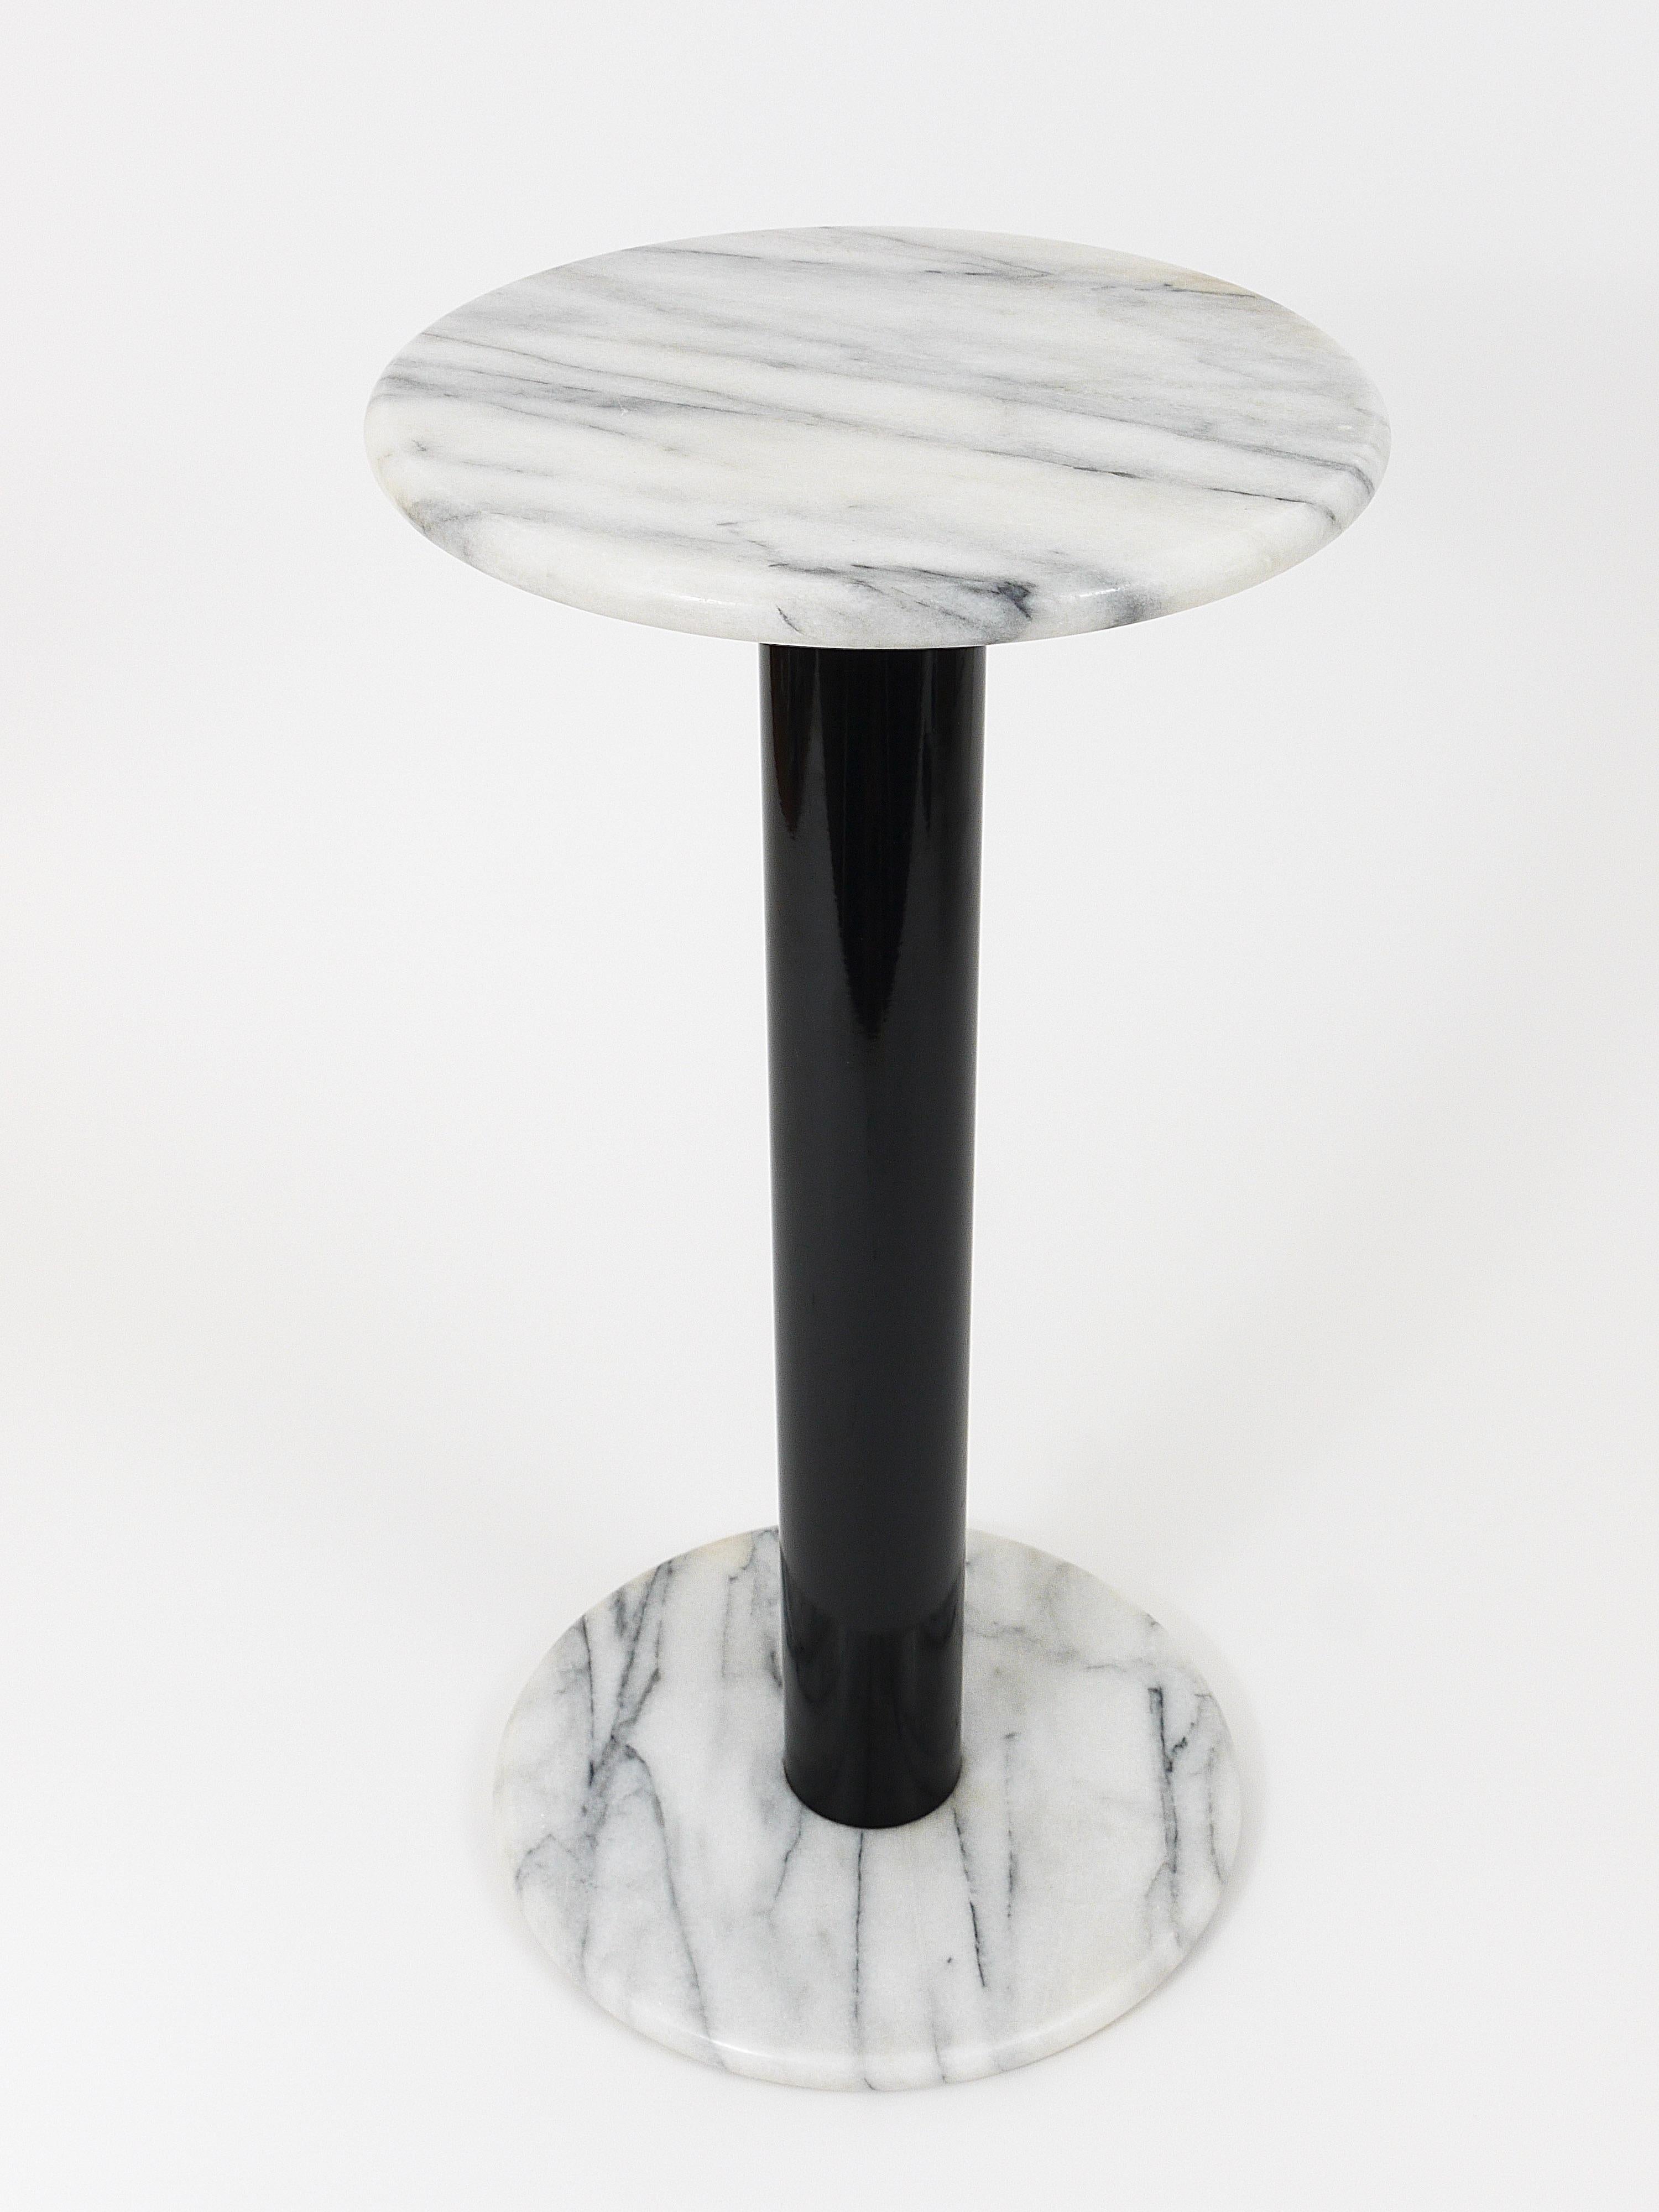 Post-Modern Postmodern White Carrara Marble Flower Stand Pedestal Table, Italy, 1980s For Sale